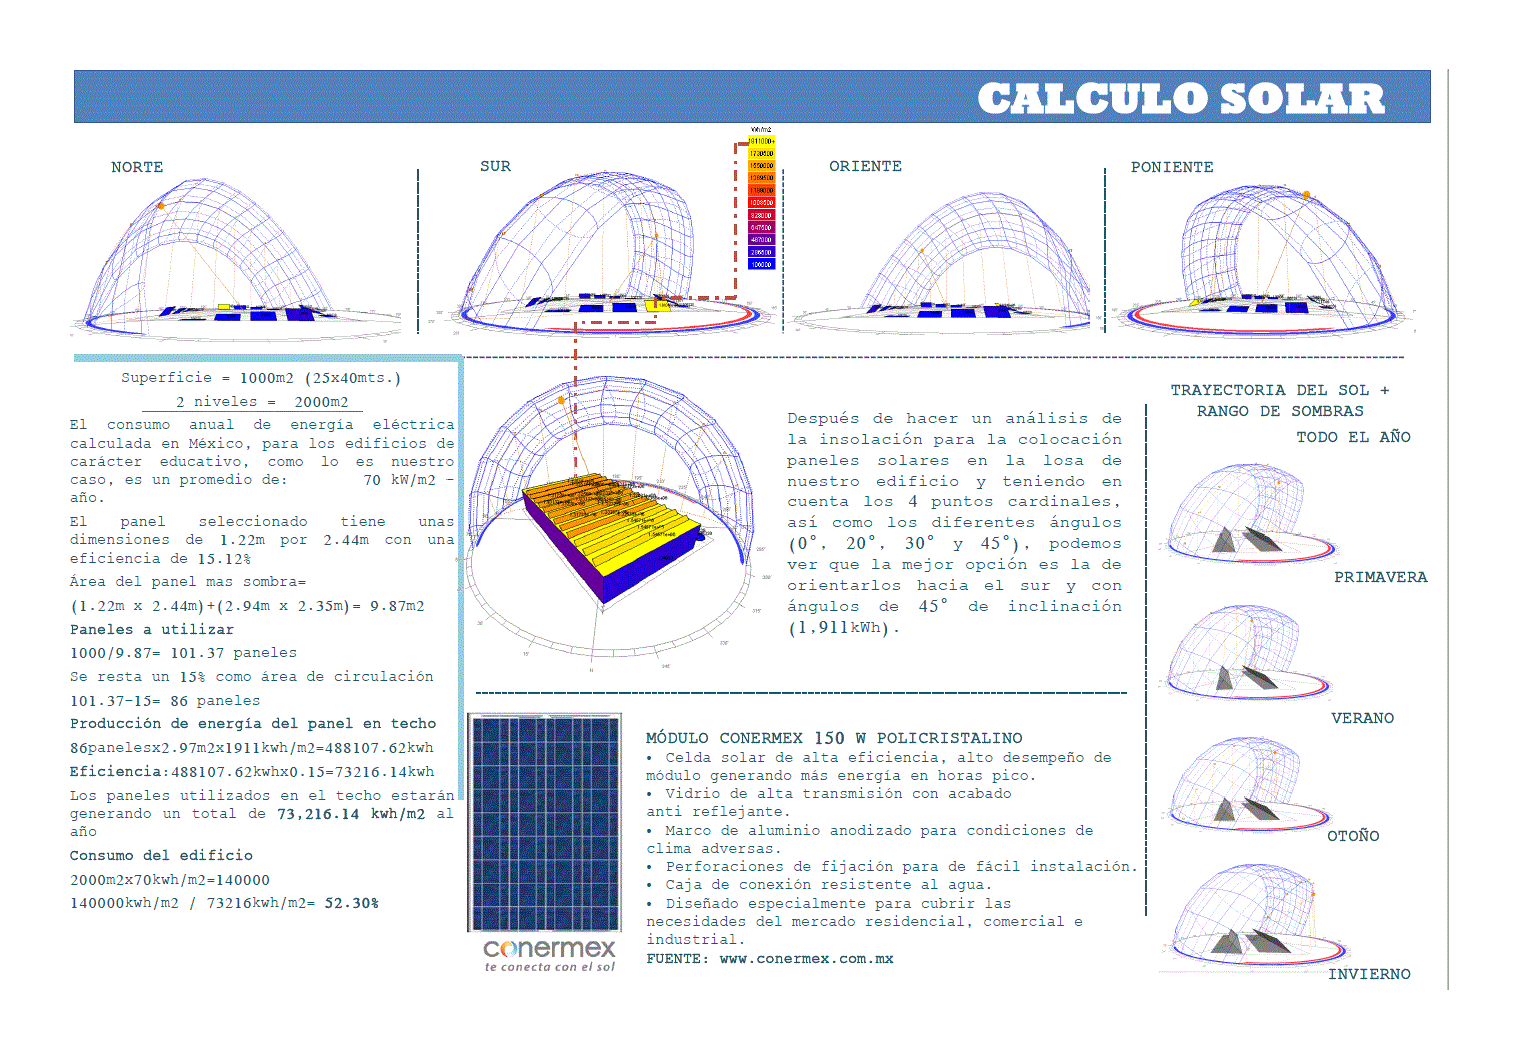 Calculo Solar - Mexico